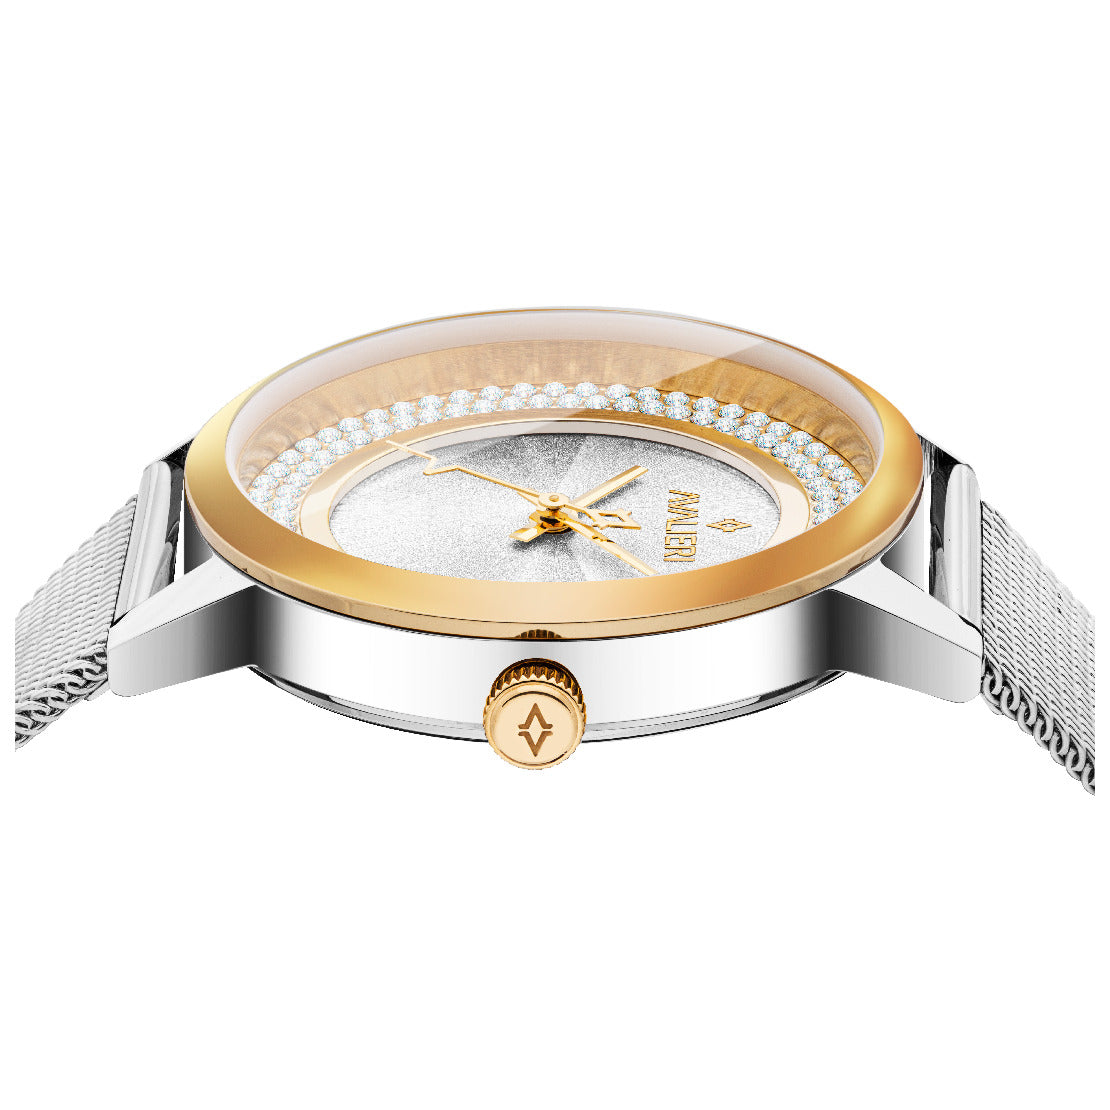 Avalieri Women's Quartz Watch, Gold and Silver Dial - AV-2540B